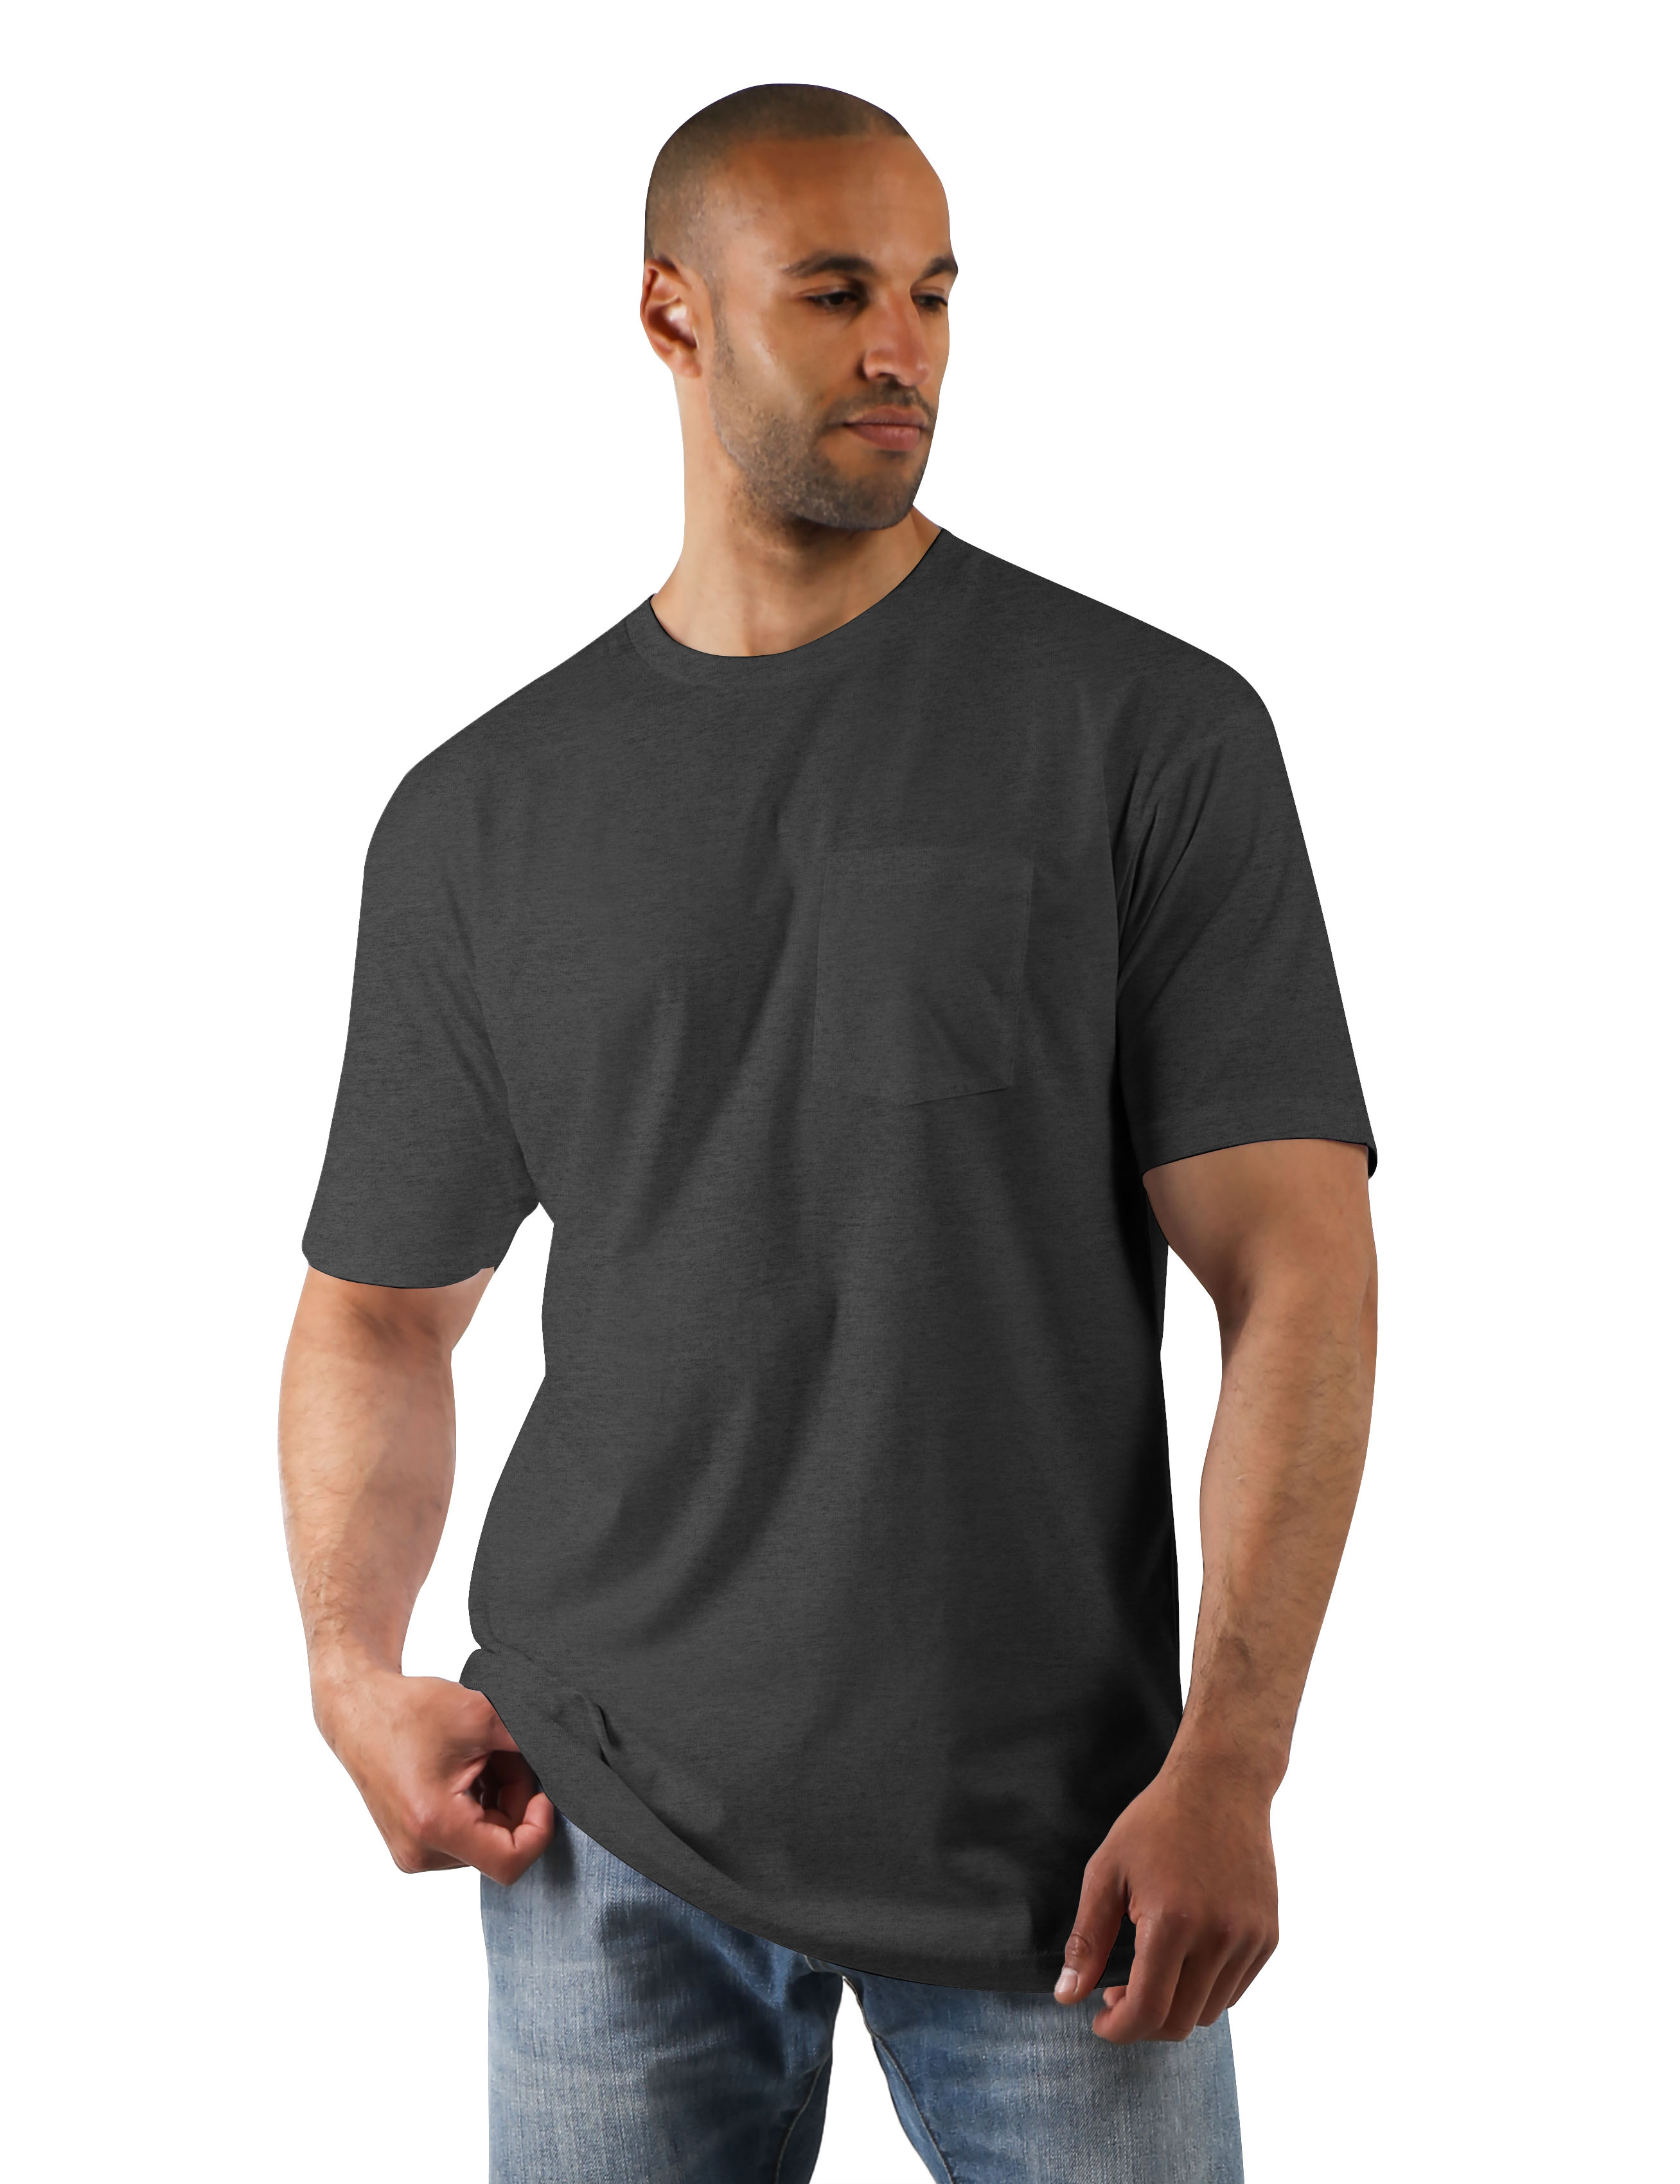 Ma Croix Mens Premium Pocket Tee Lightweight Cotton Workwear Crewneck Short Sleeve T Shirt - image 1 of 6